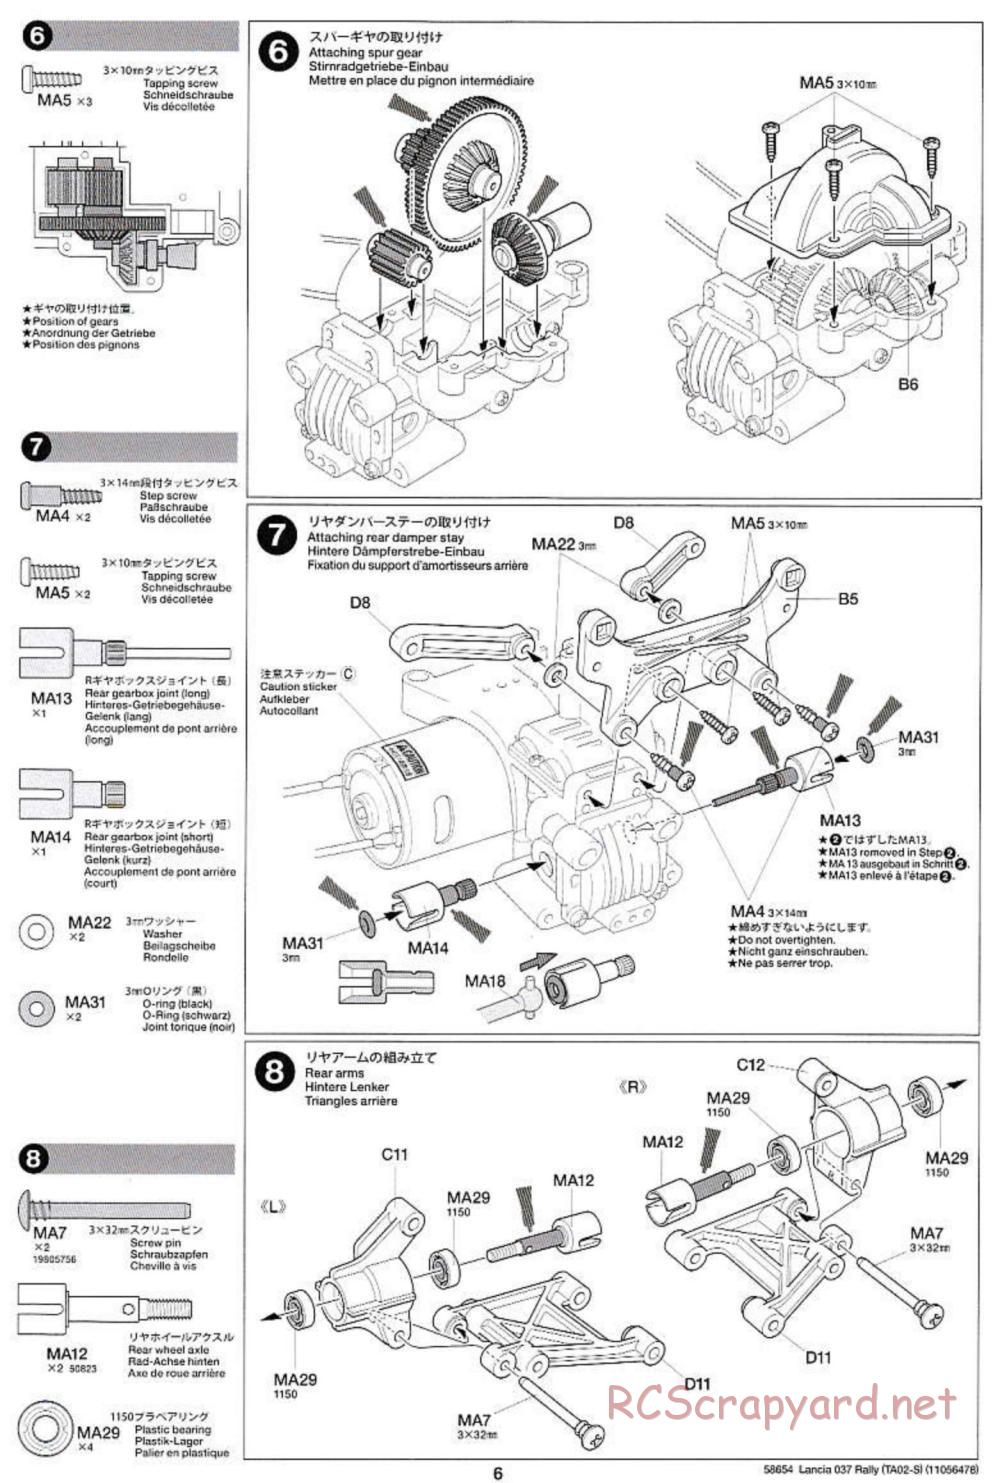 Tamiya - Lancia 037 Rally Chassis - Manual - Page 6